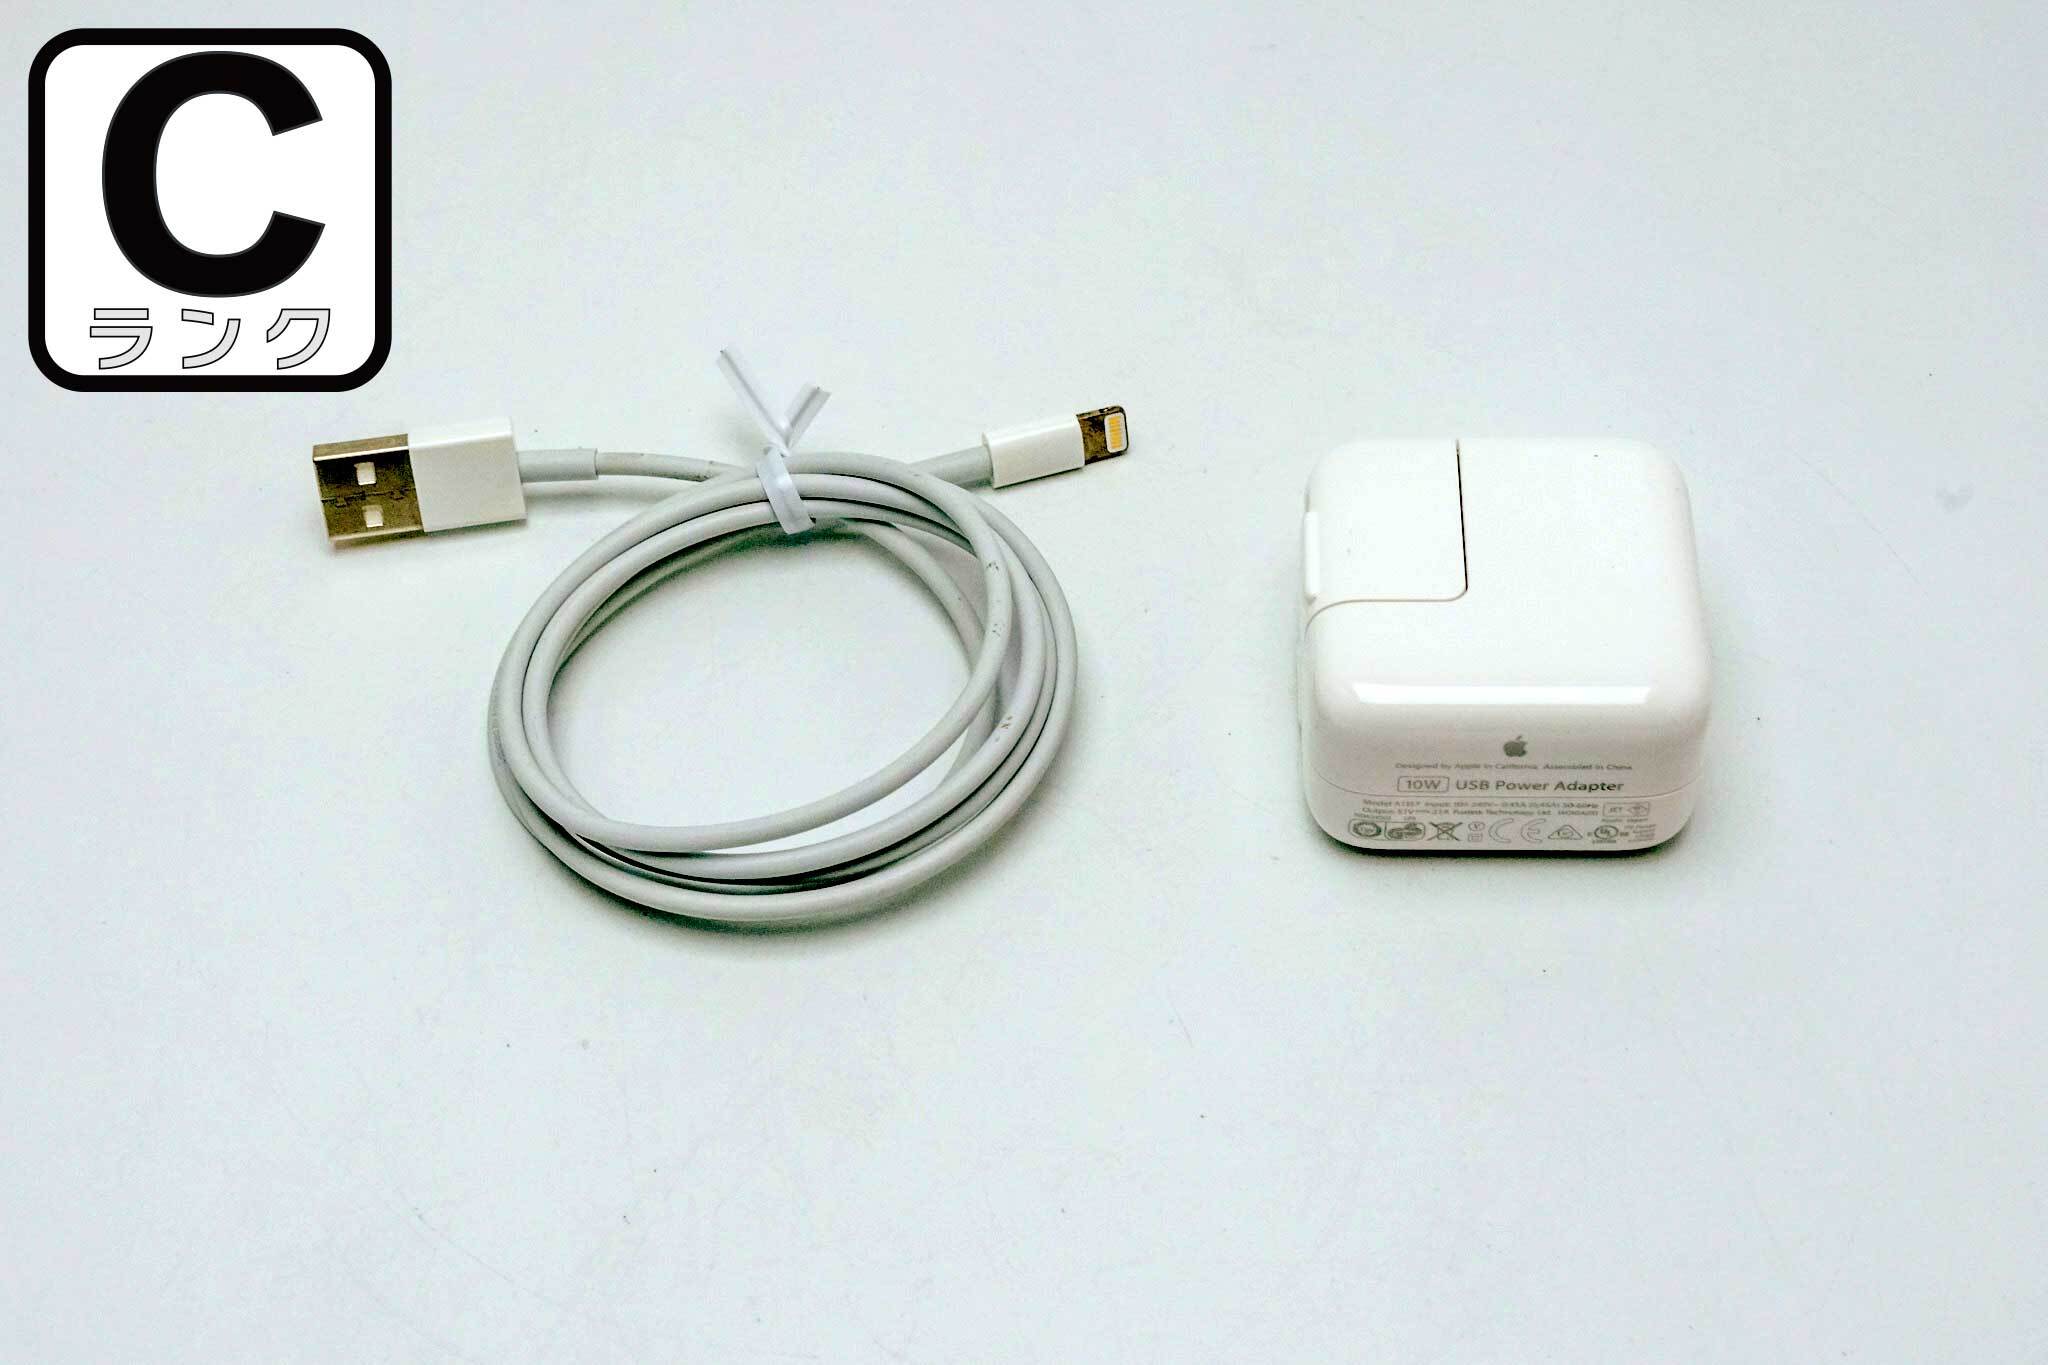 Apple充電器セット(MacBook Pro \u0026 iPhone充電器)